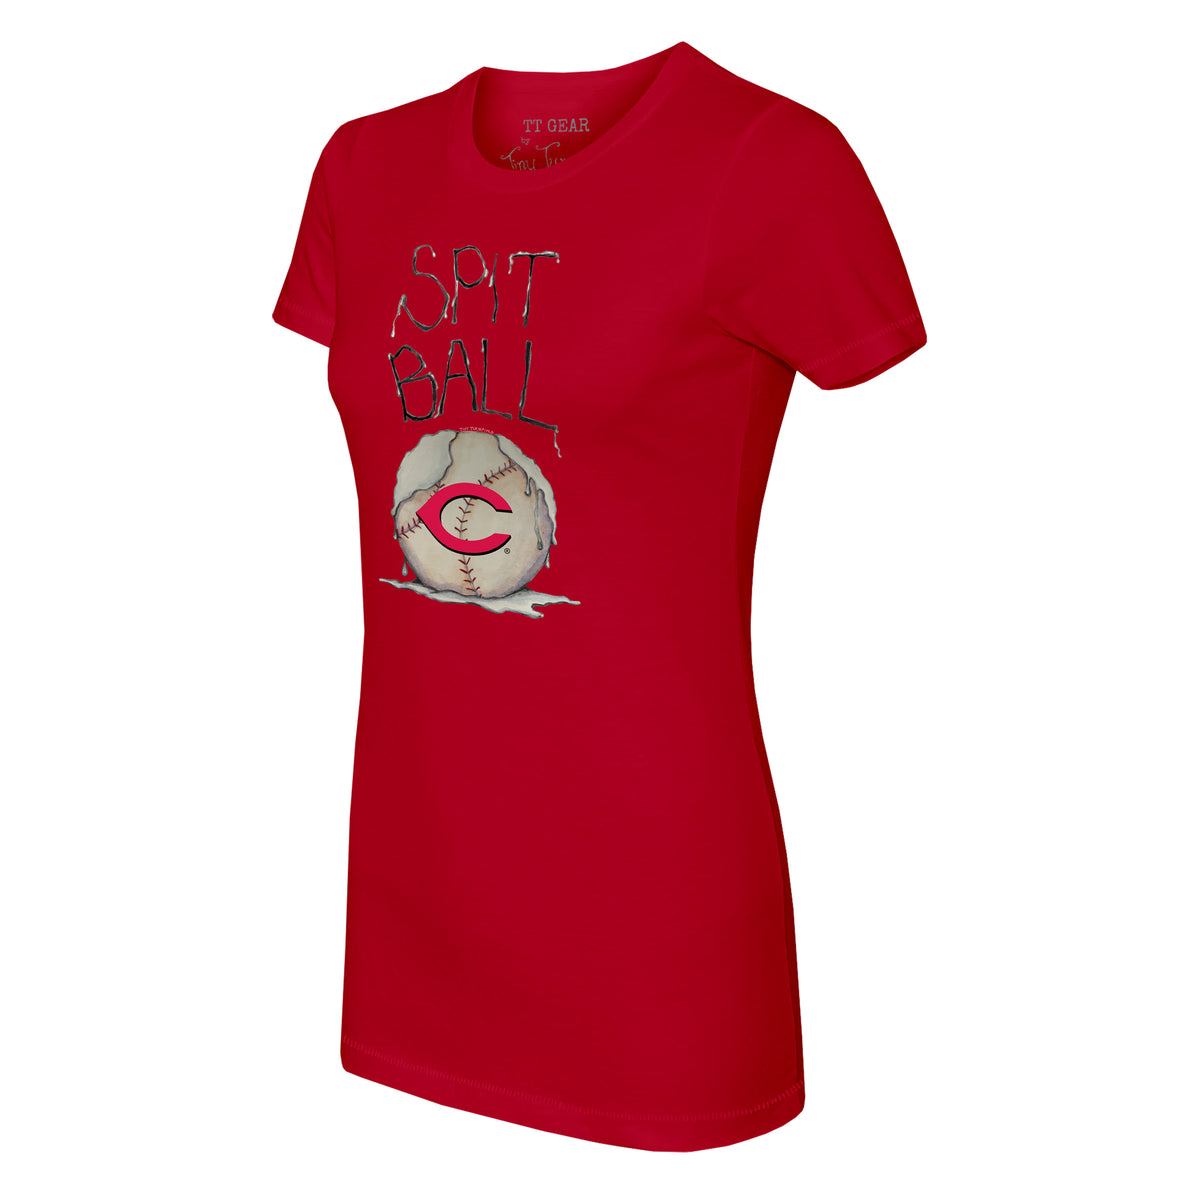 Cincinnati Reds Stitched Baseball Tee Shirt Women's Large / White